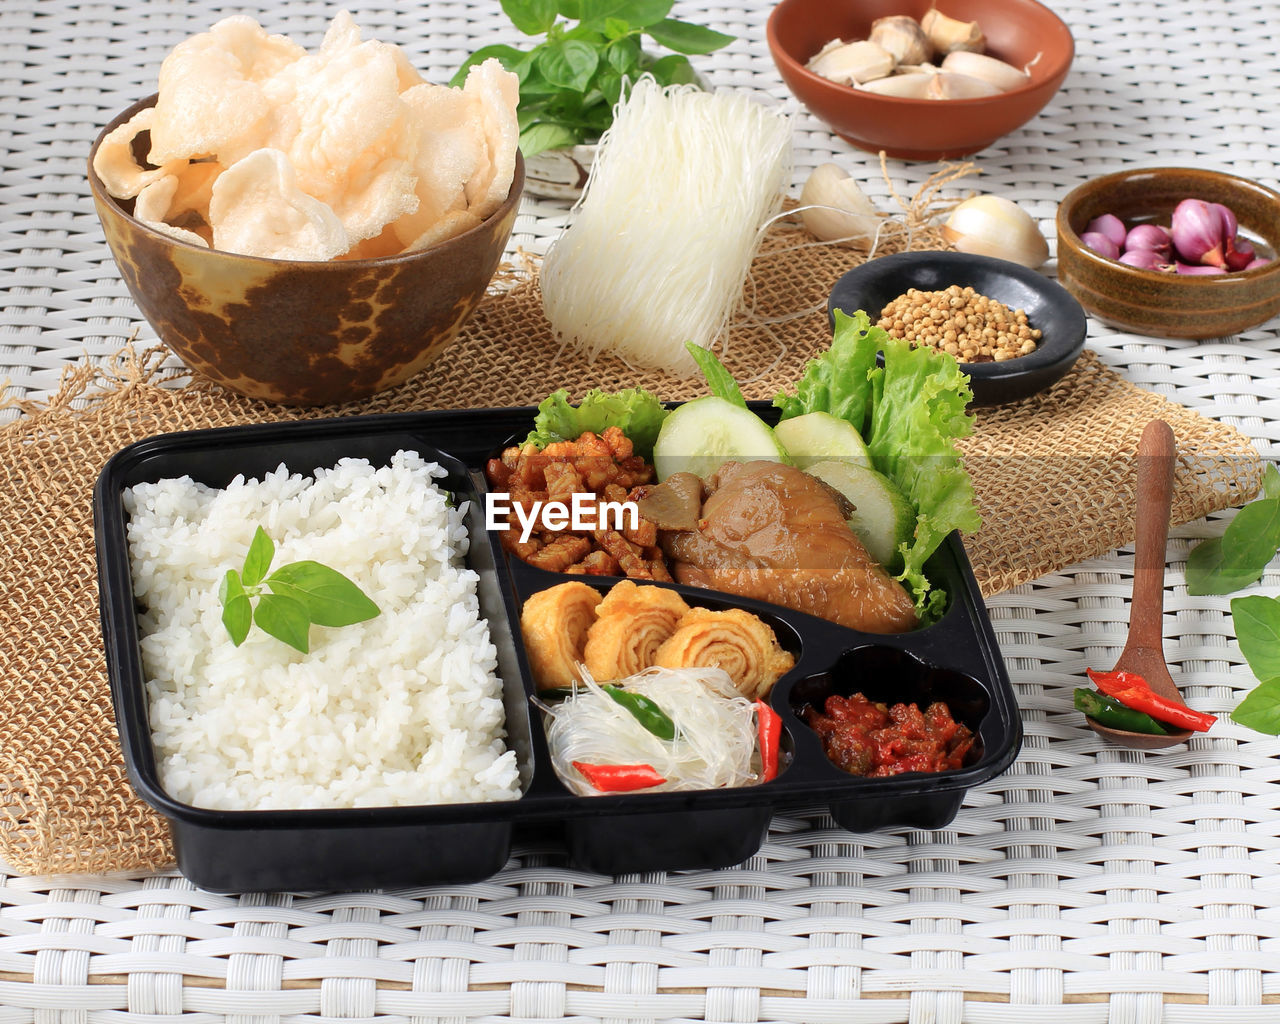 Rice box or nasi berkat, indonesian nasi kotak with soy sauce chicken, oreg tempeh, and spicy paste